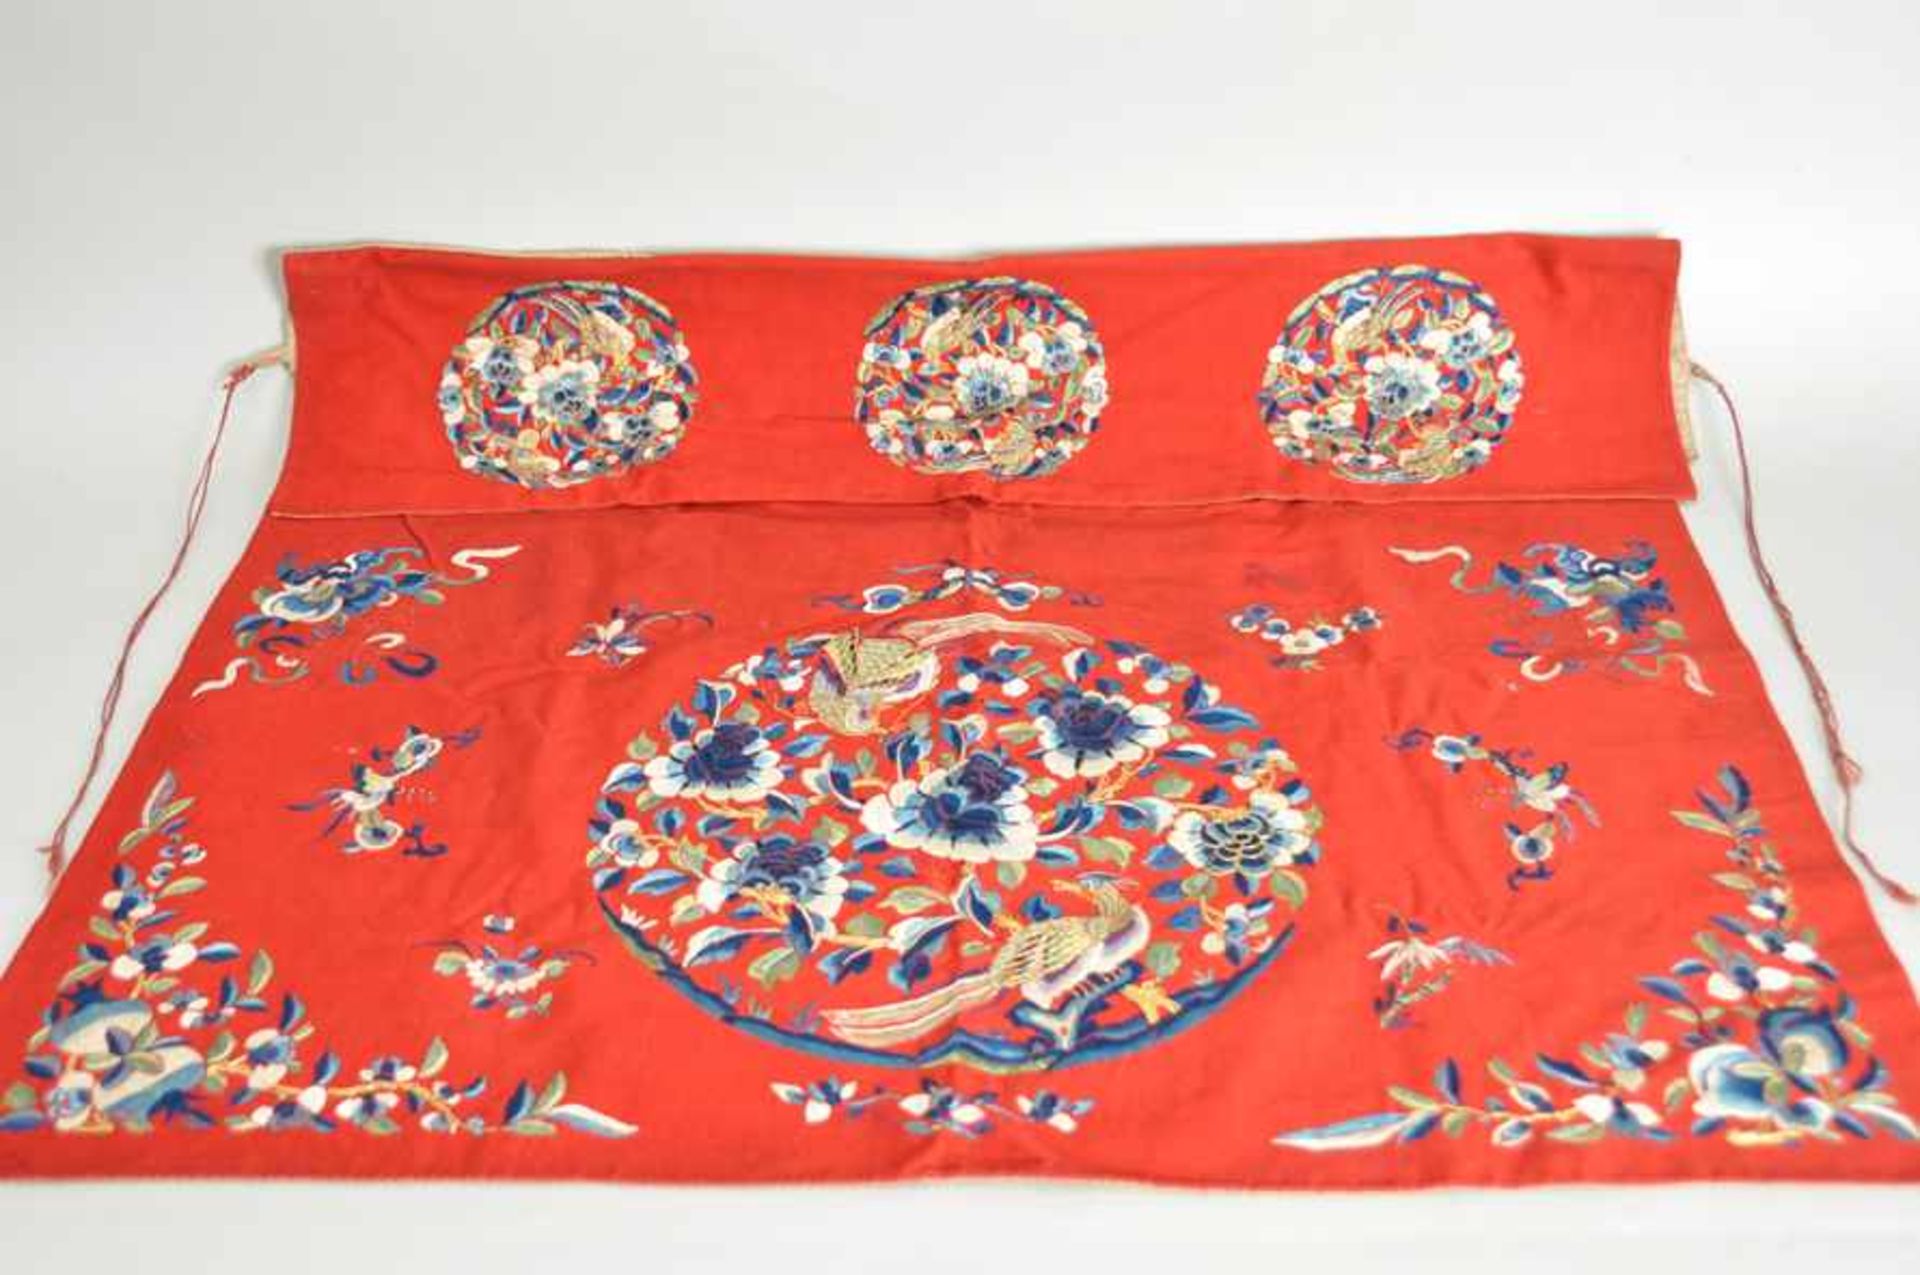 Asiatischer Wandbehang. Zentraler Blütenkreis mit Paradiesvögeln, Winkel mit floraler Stickerei. 20.